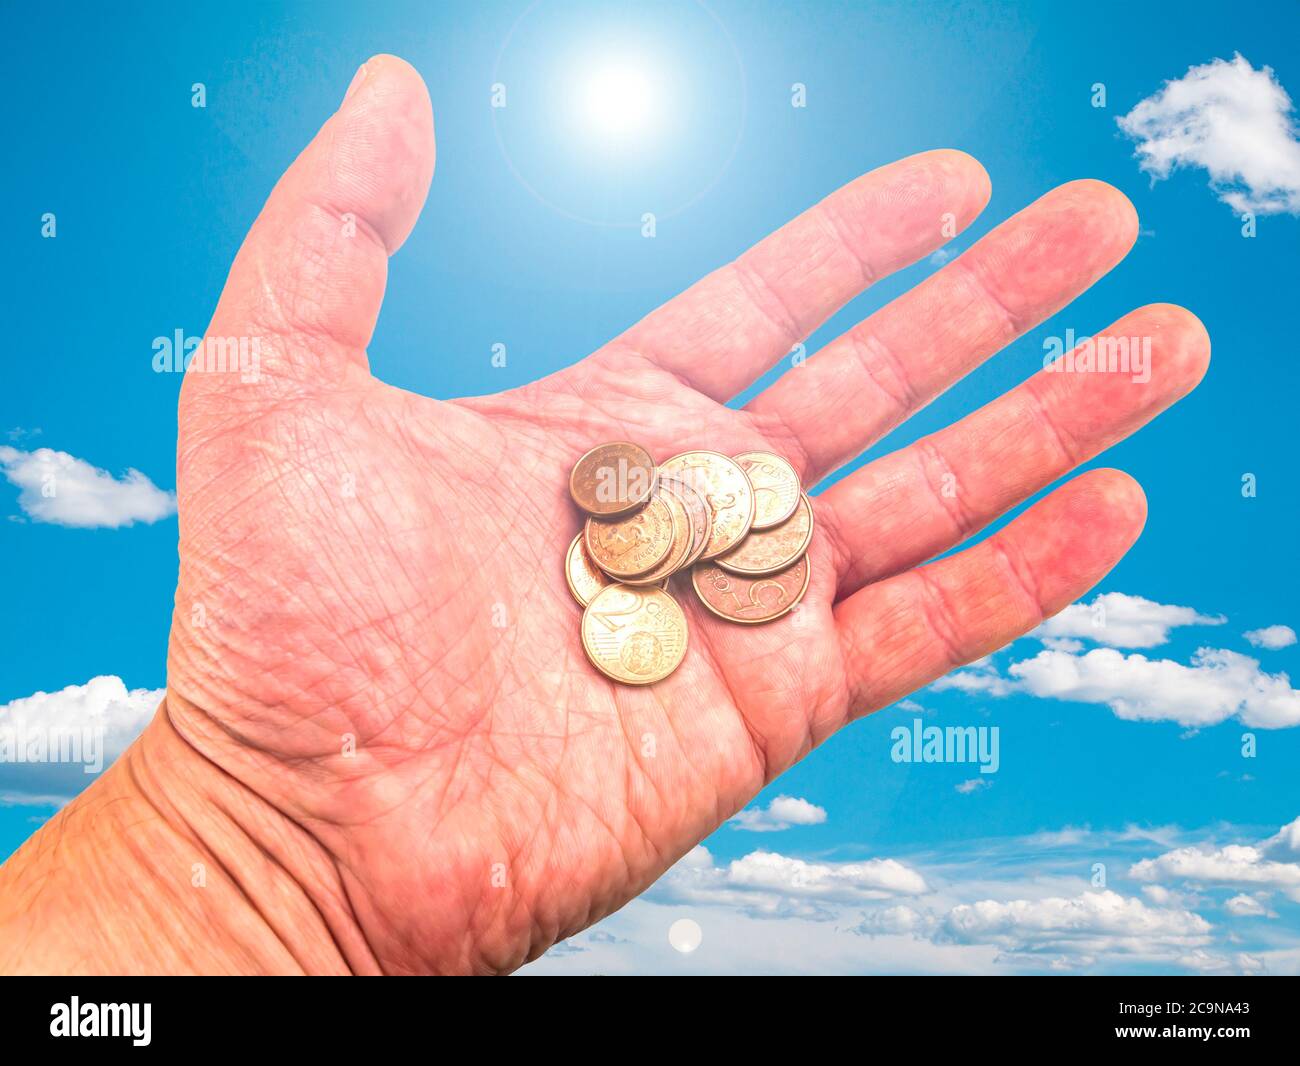 hand asking for money